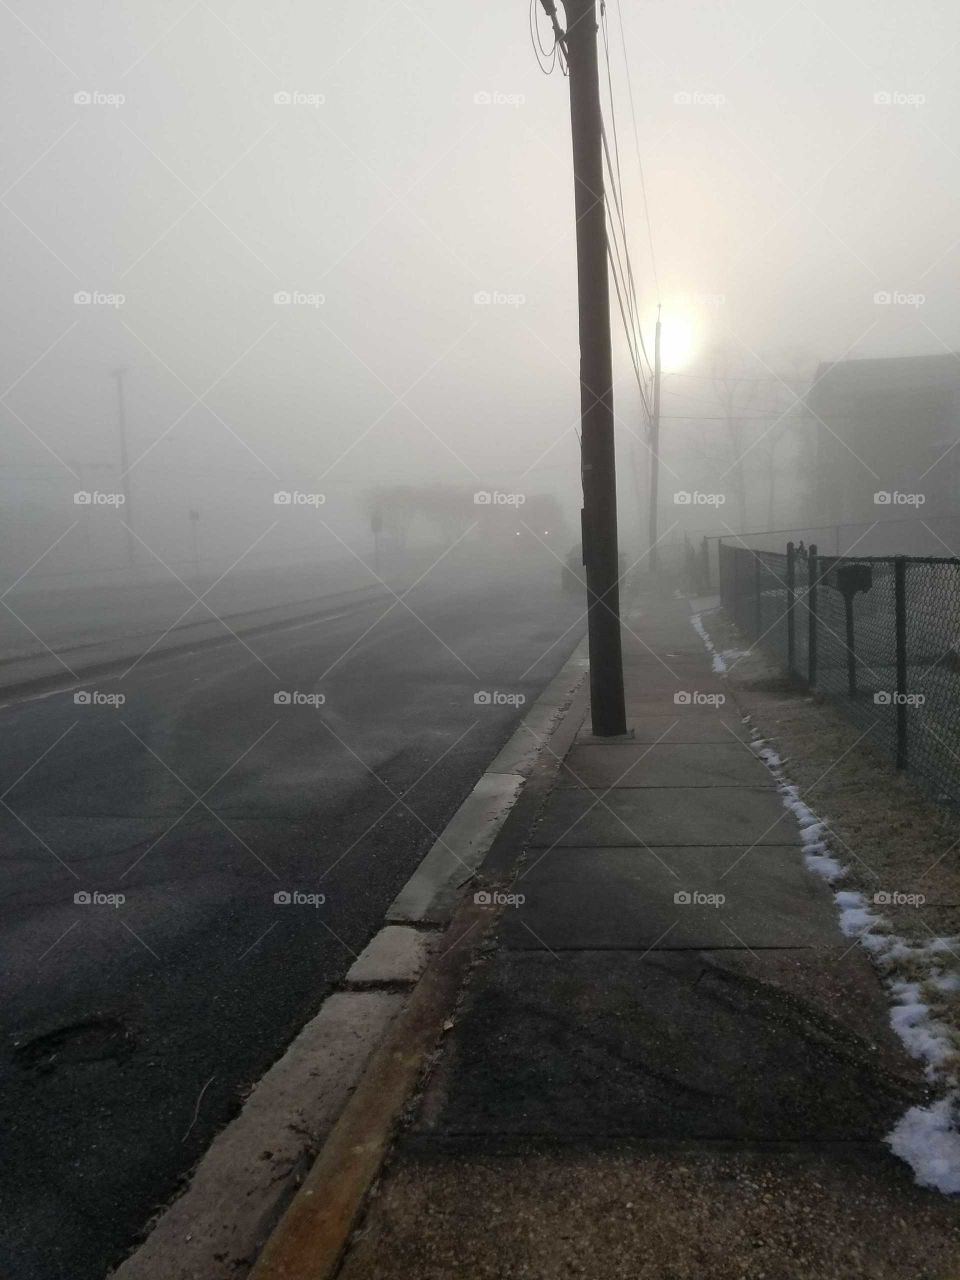 Foggy morning in the neighborhood.